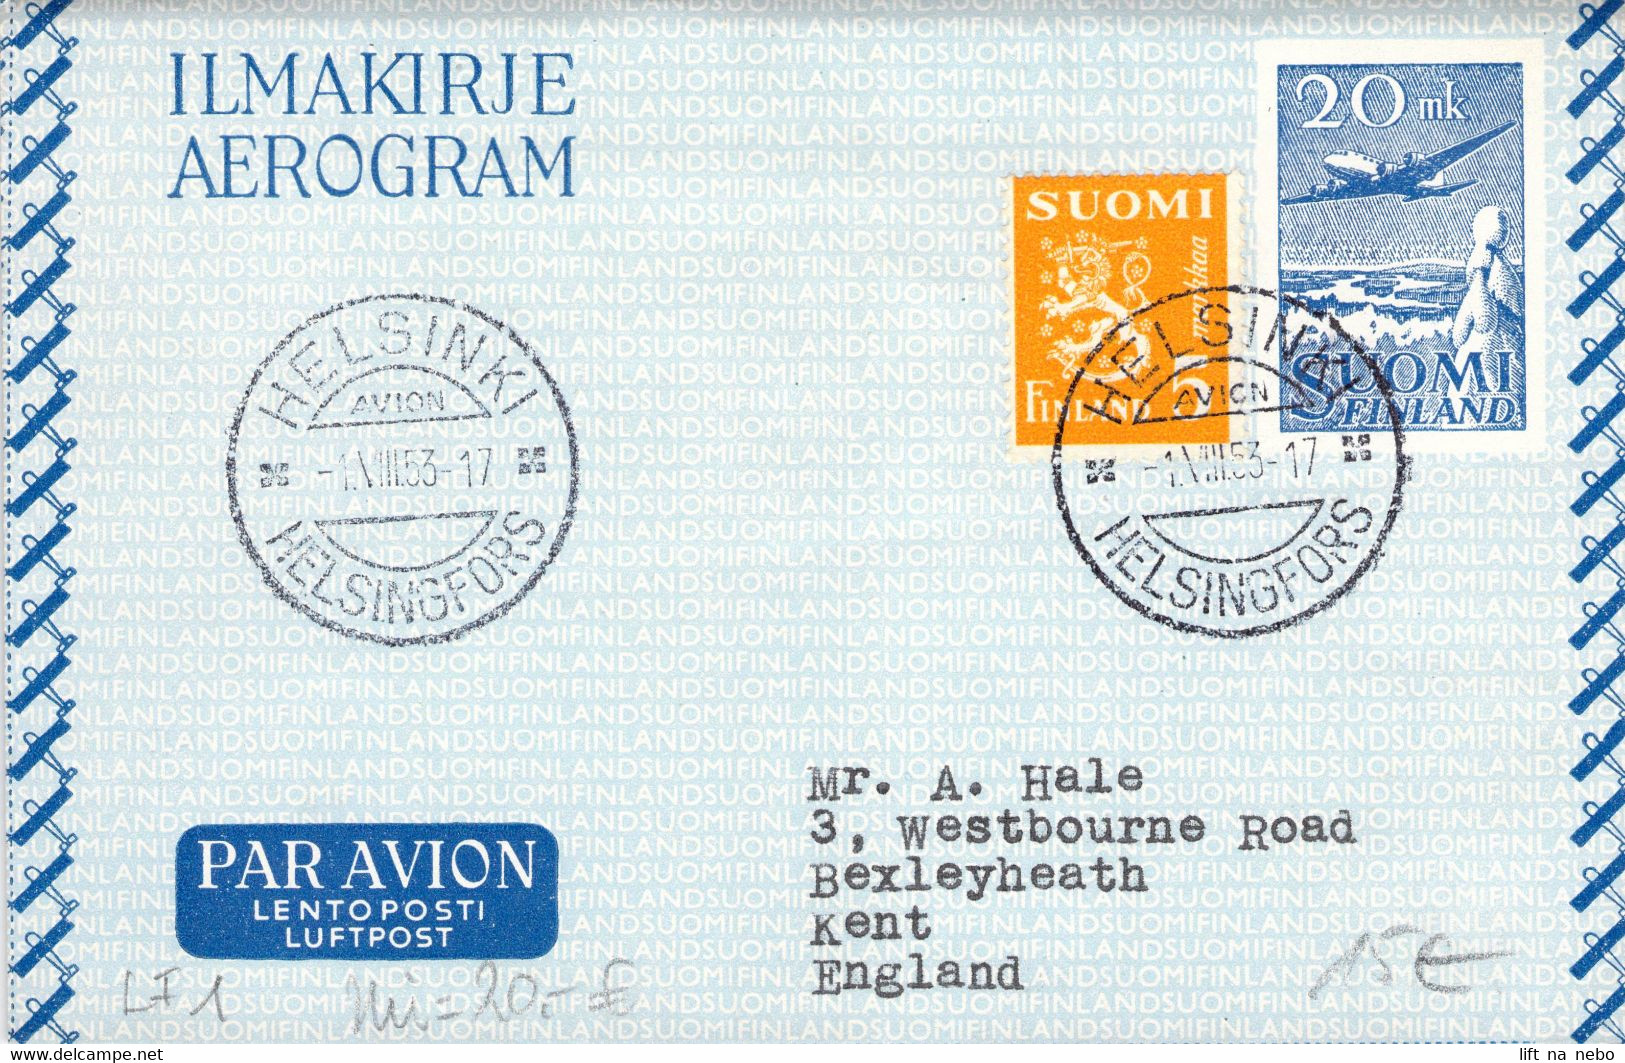 Finland Aerogram Ilmakirje Avion Air Mail Flypost Postal Stationery Cover 1953 Helsinki - Kent England FREE SHIPPING 347 - Cartas & Documentos